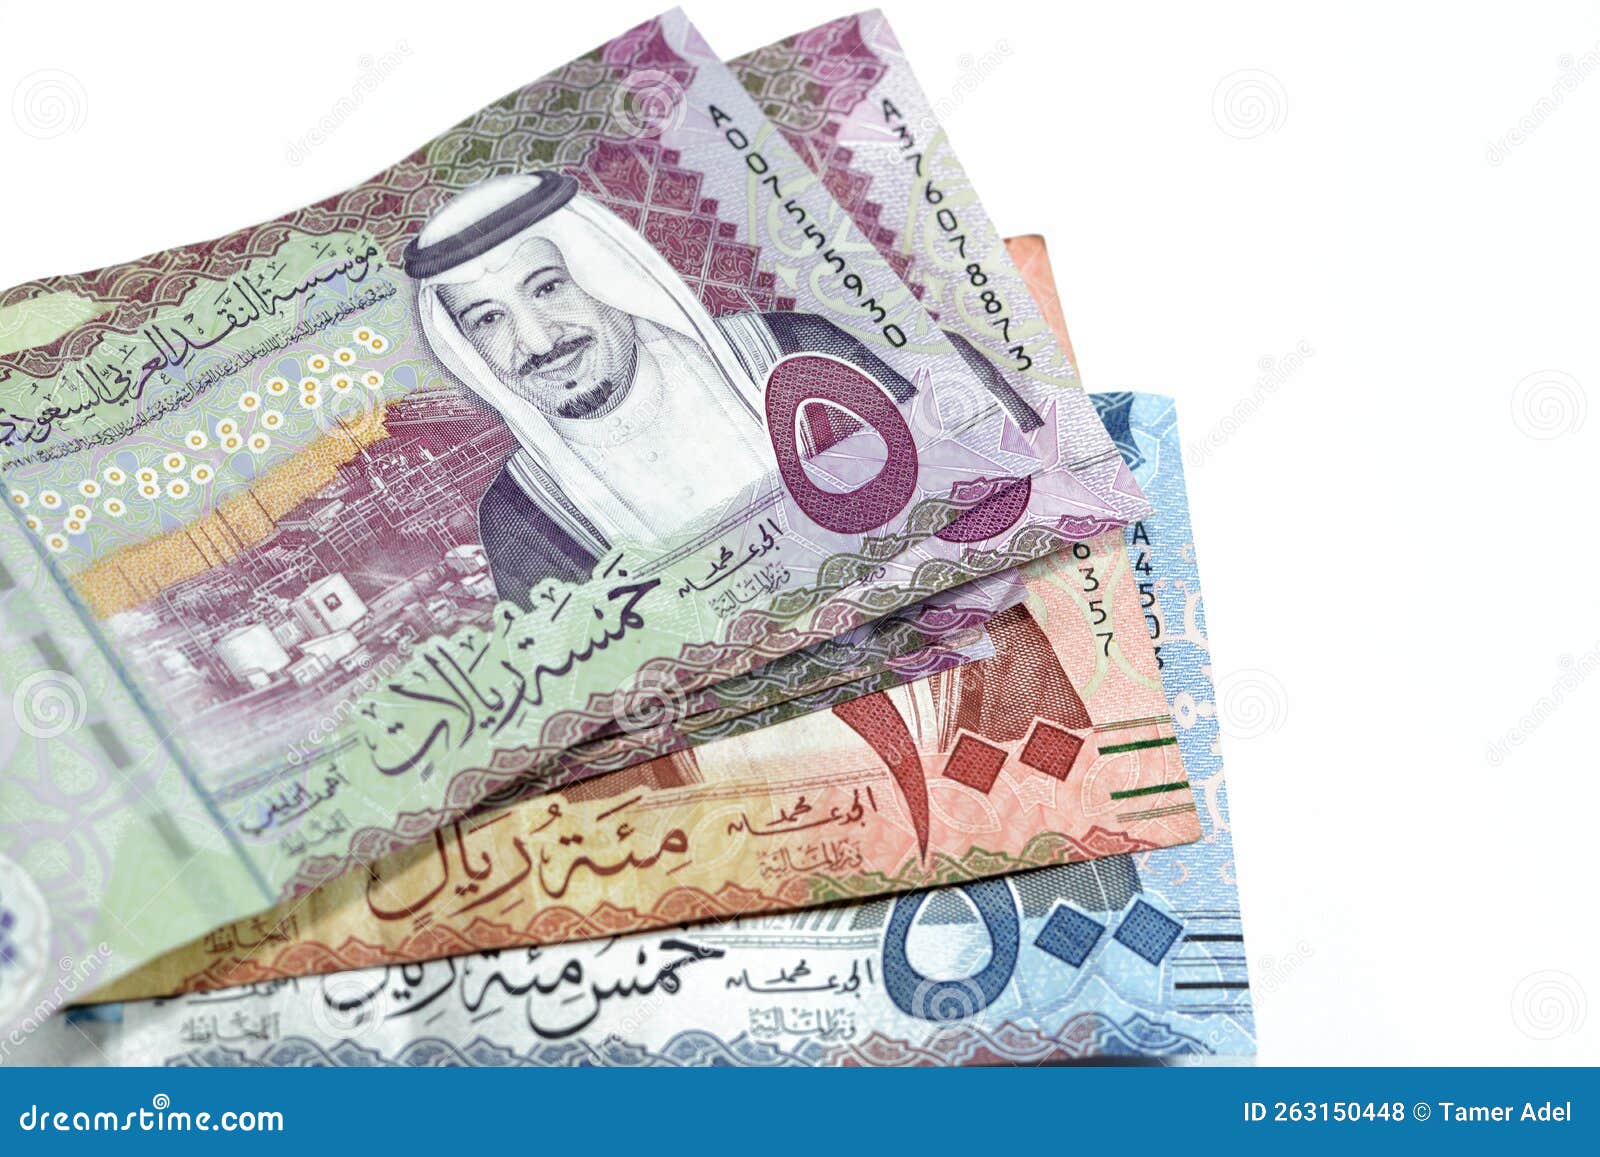 500 sar five hundred saudi arabia riyals cash money with king abdulaziz al saud and kabaa and 100 sar one hundred saudi arabia